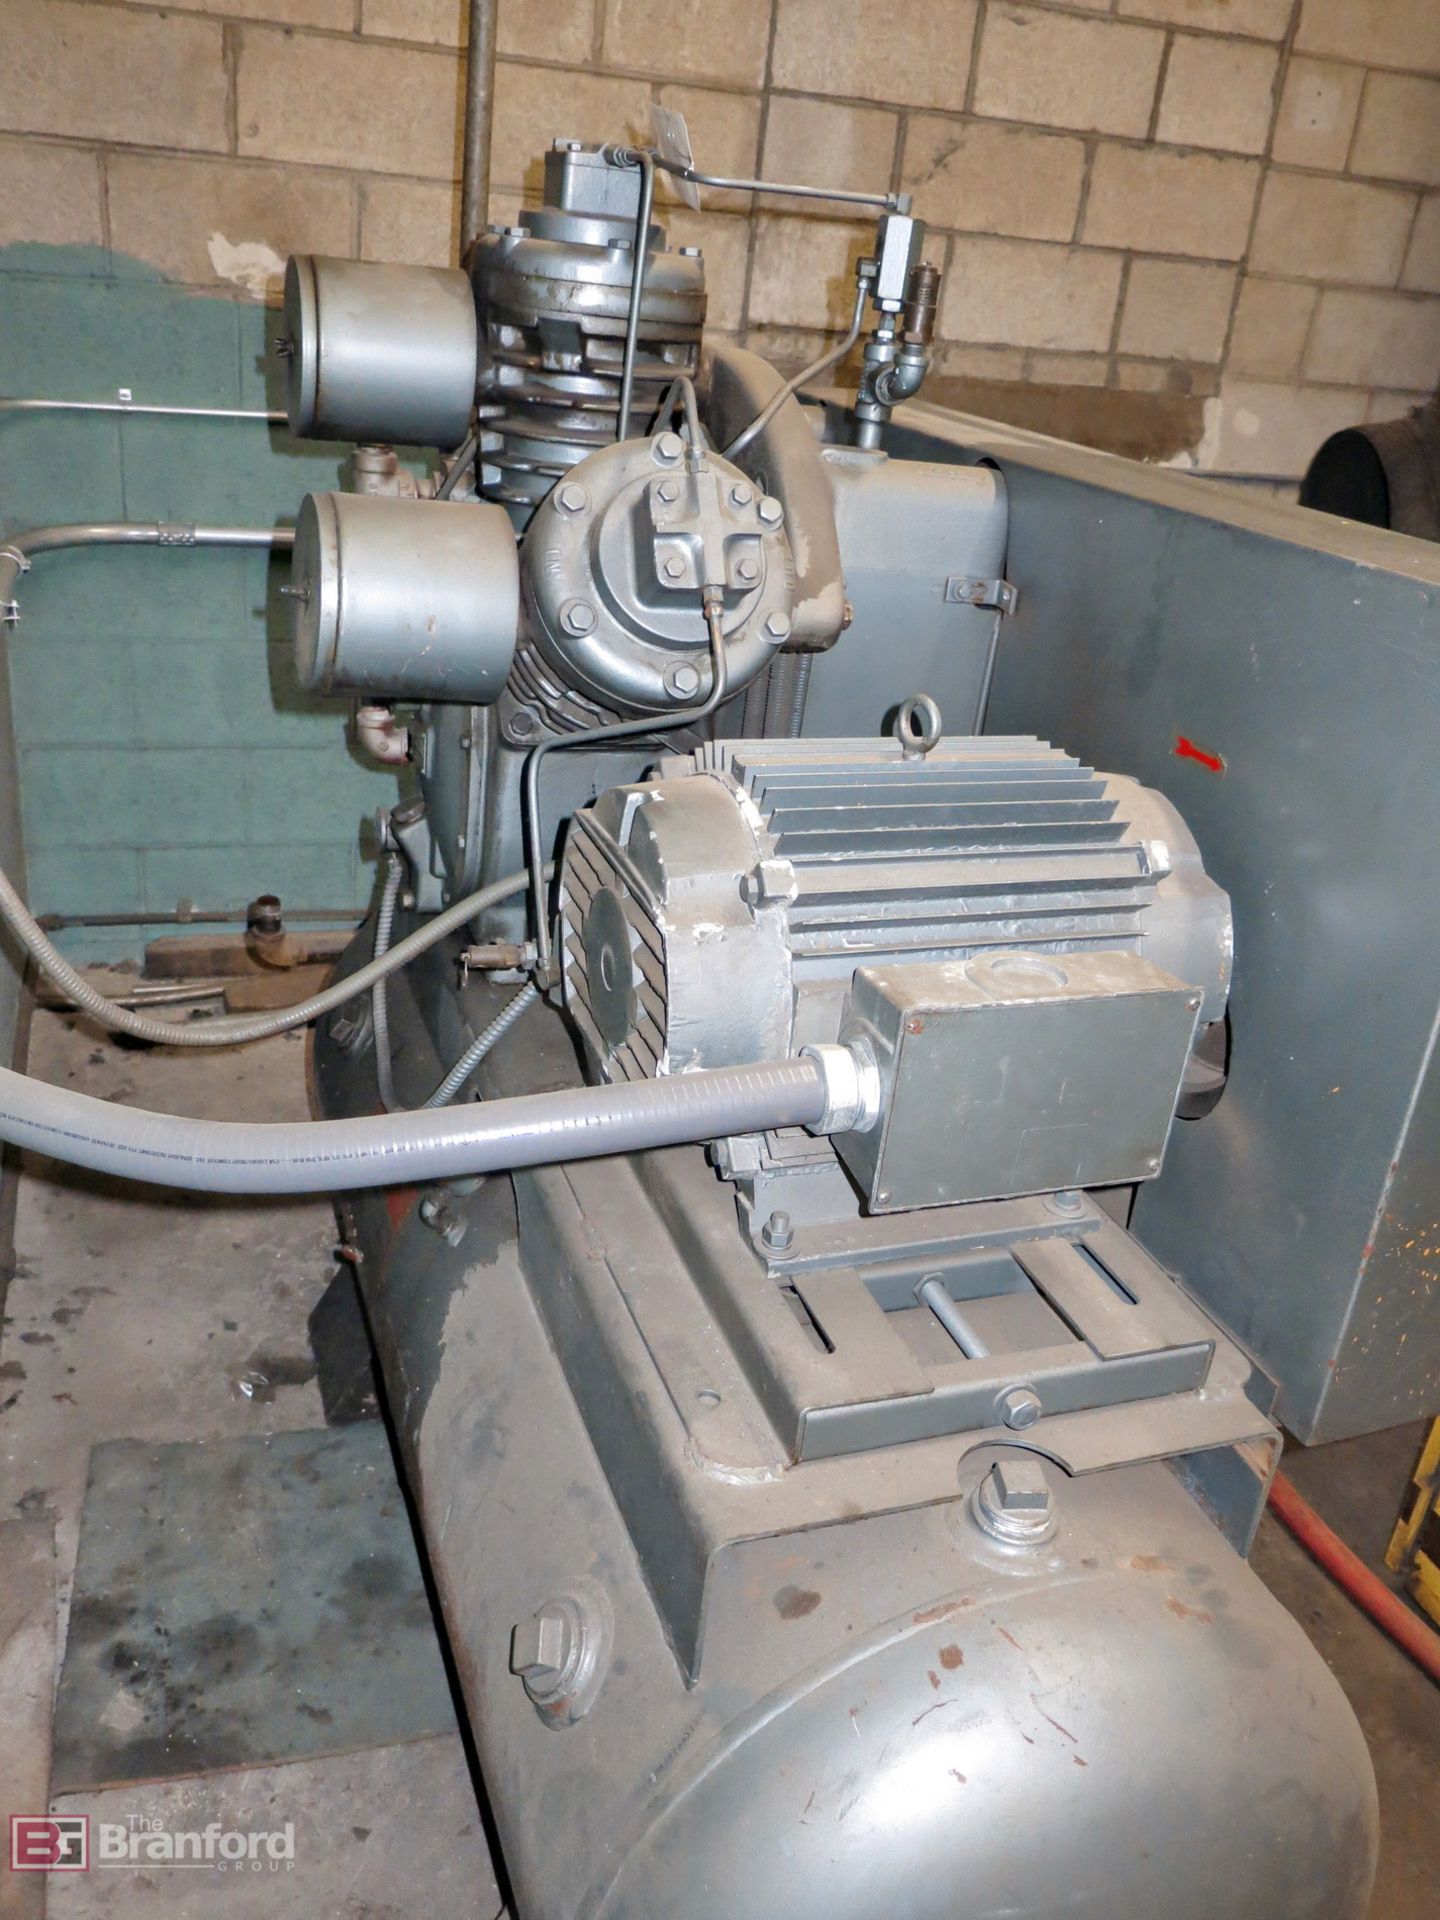 Ingersoll Rand approx. 15-hp air compressor